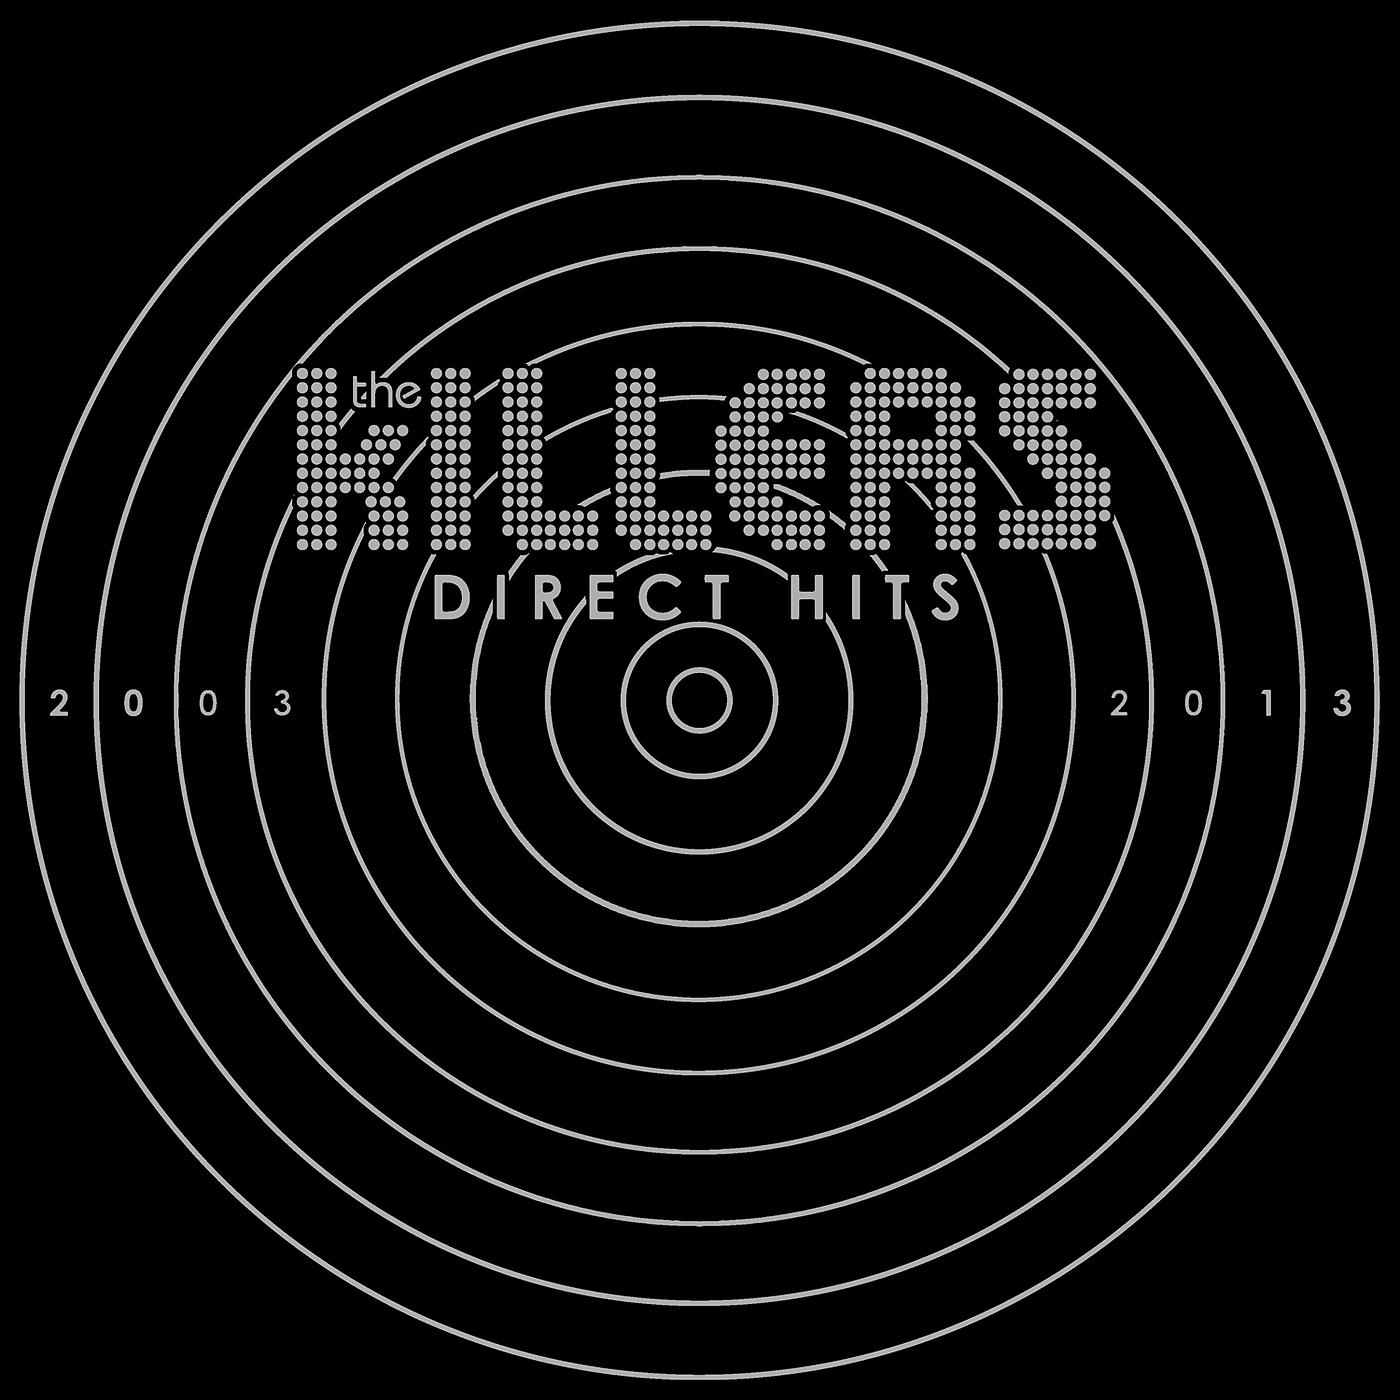 Killers обложка. The Killers обложка. The Killers direct Hits. The Killers альбомы. The Killers обложки альбомов.